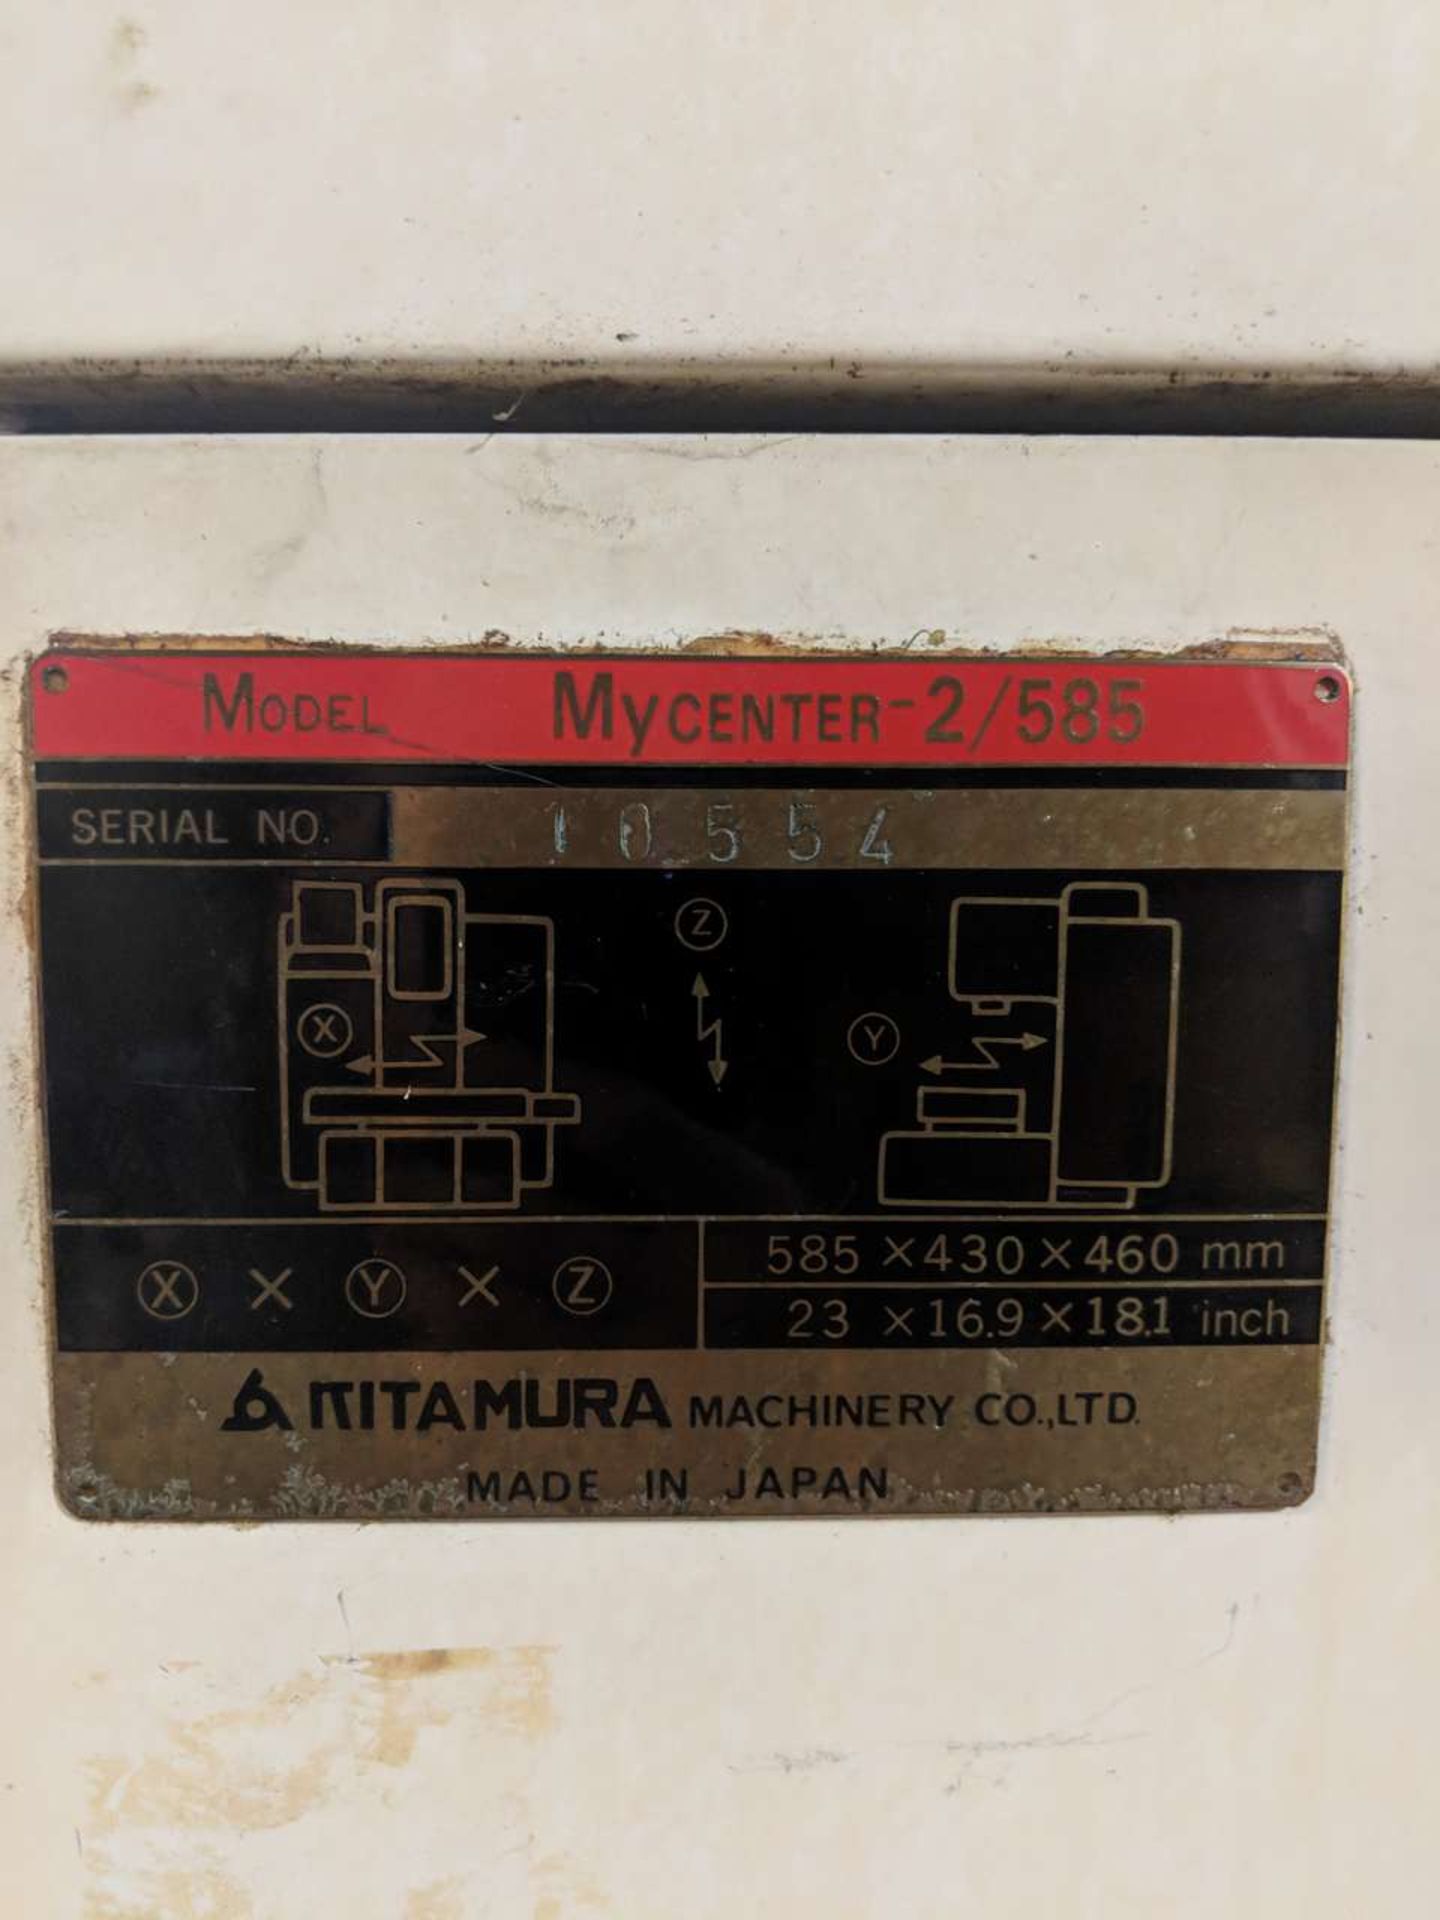 1980s KITAMURA MYCENTER-2/585 CNC MACHINING CENTRE - Image 5 of 5